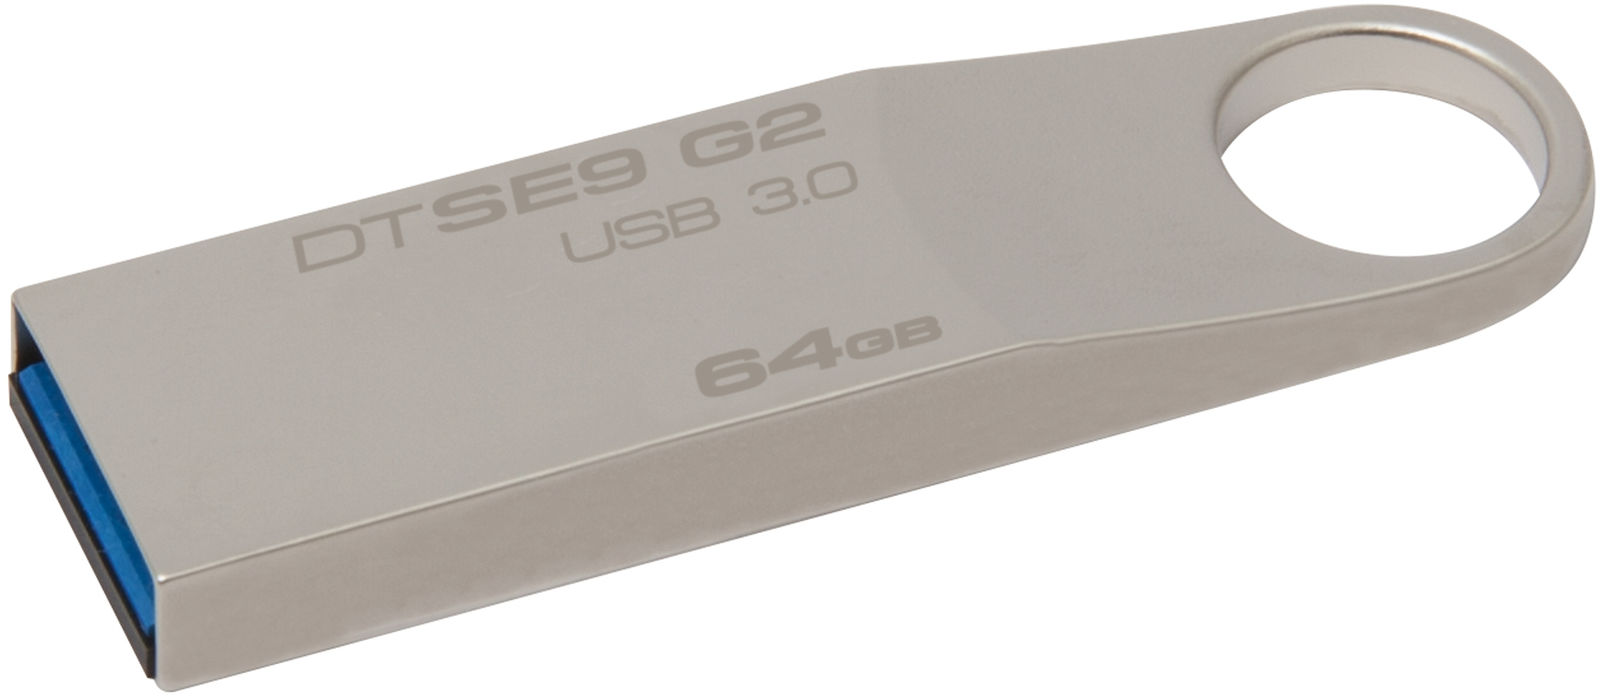 USB 64GB DTSE9G2-2